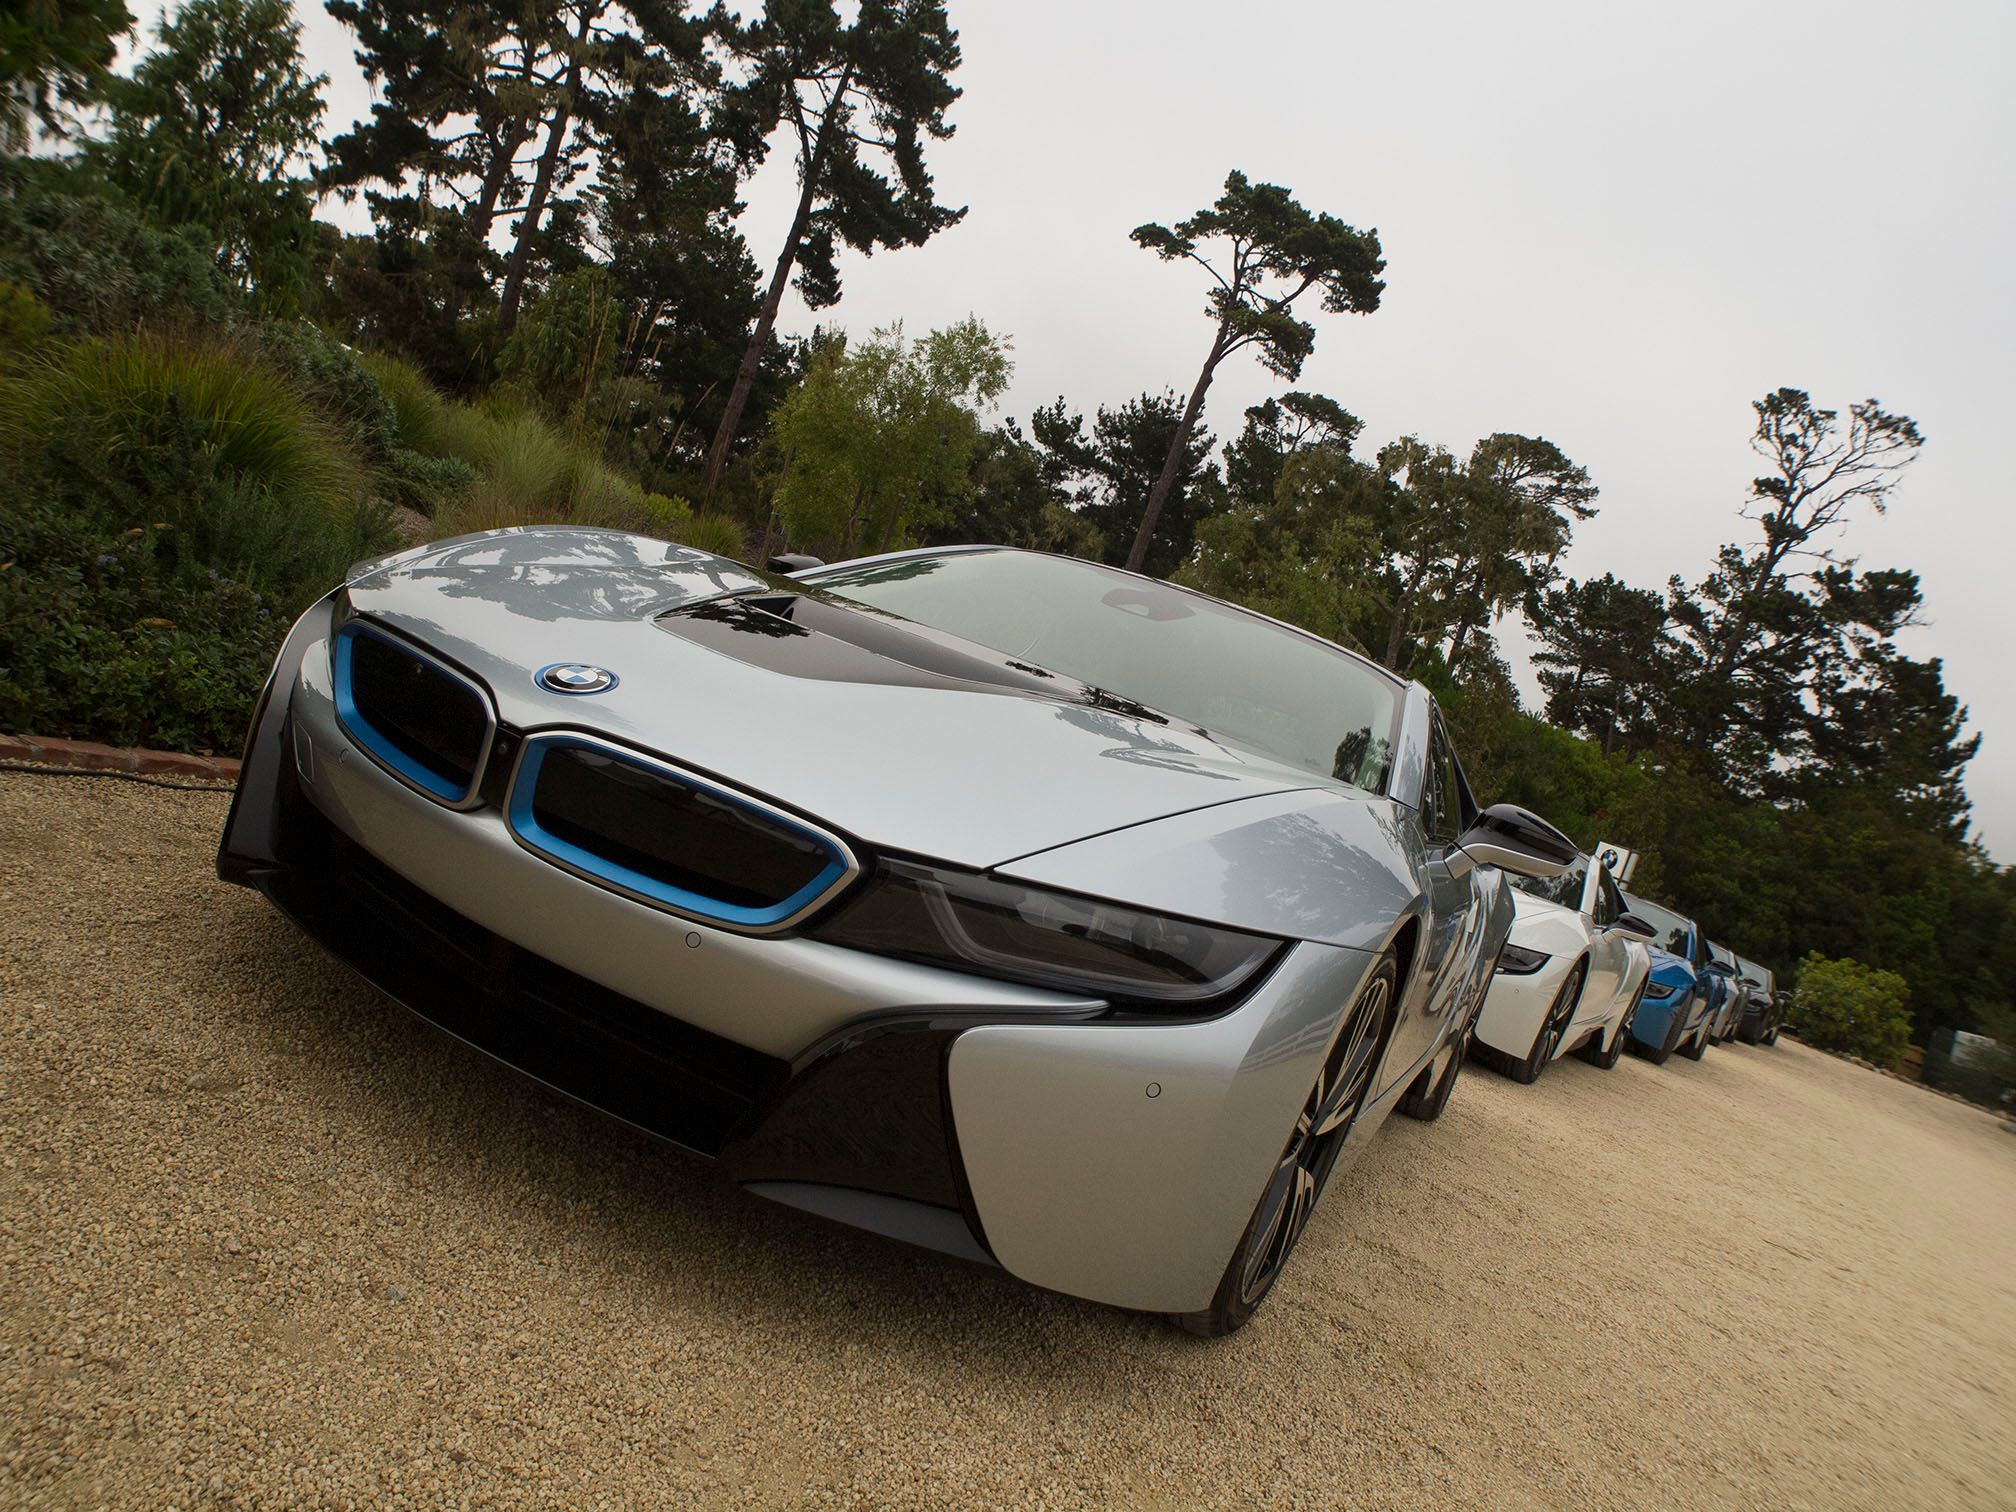 2015 BMW i8 Concours d'Elegance Edition